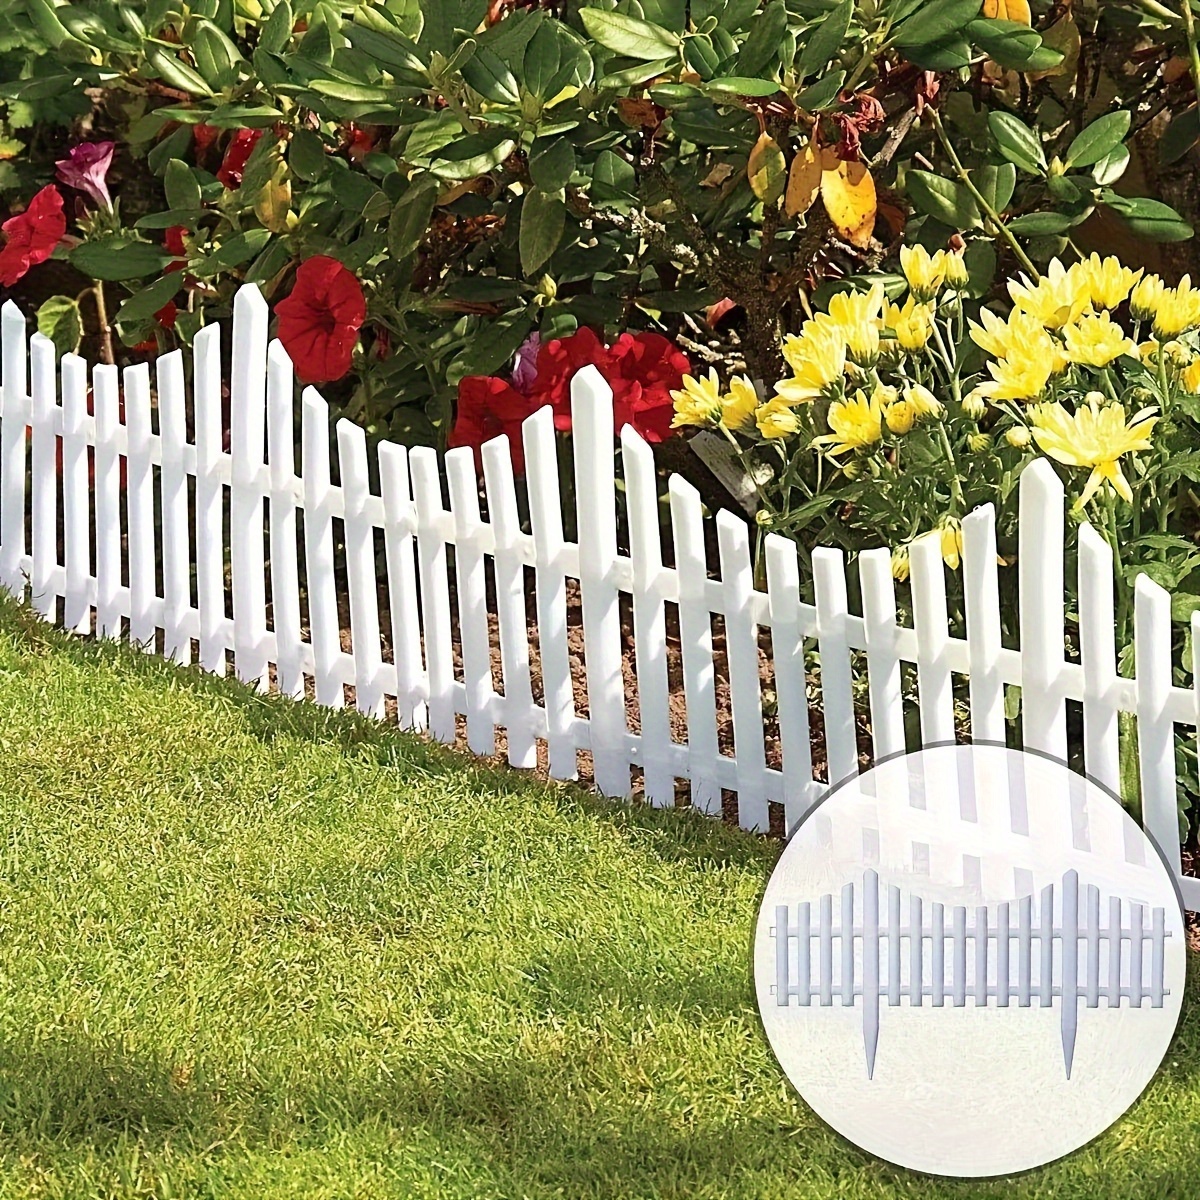 

4pcs White Plastic Garden Picket Fence Panels, Decorative Border, Lawn Flowerbed Edging, Landscape Path Barriers, Outdoor Garden Decor